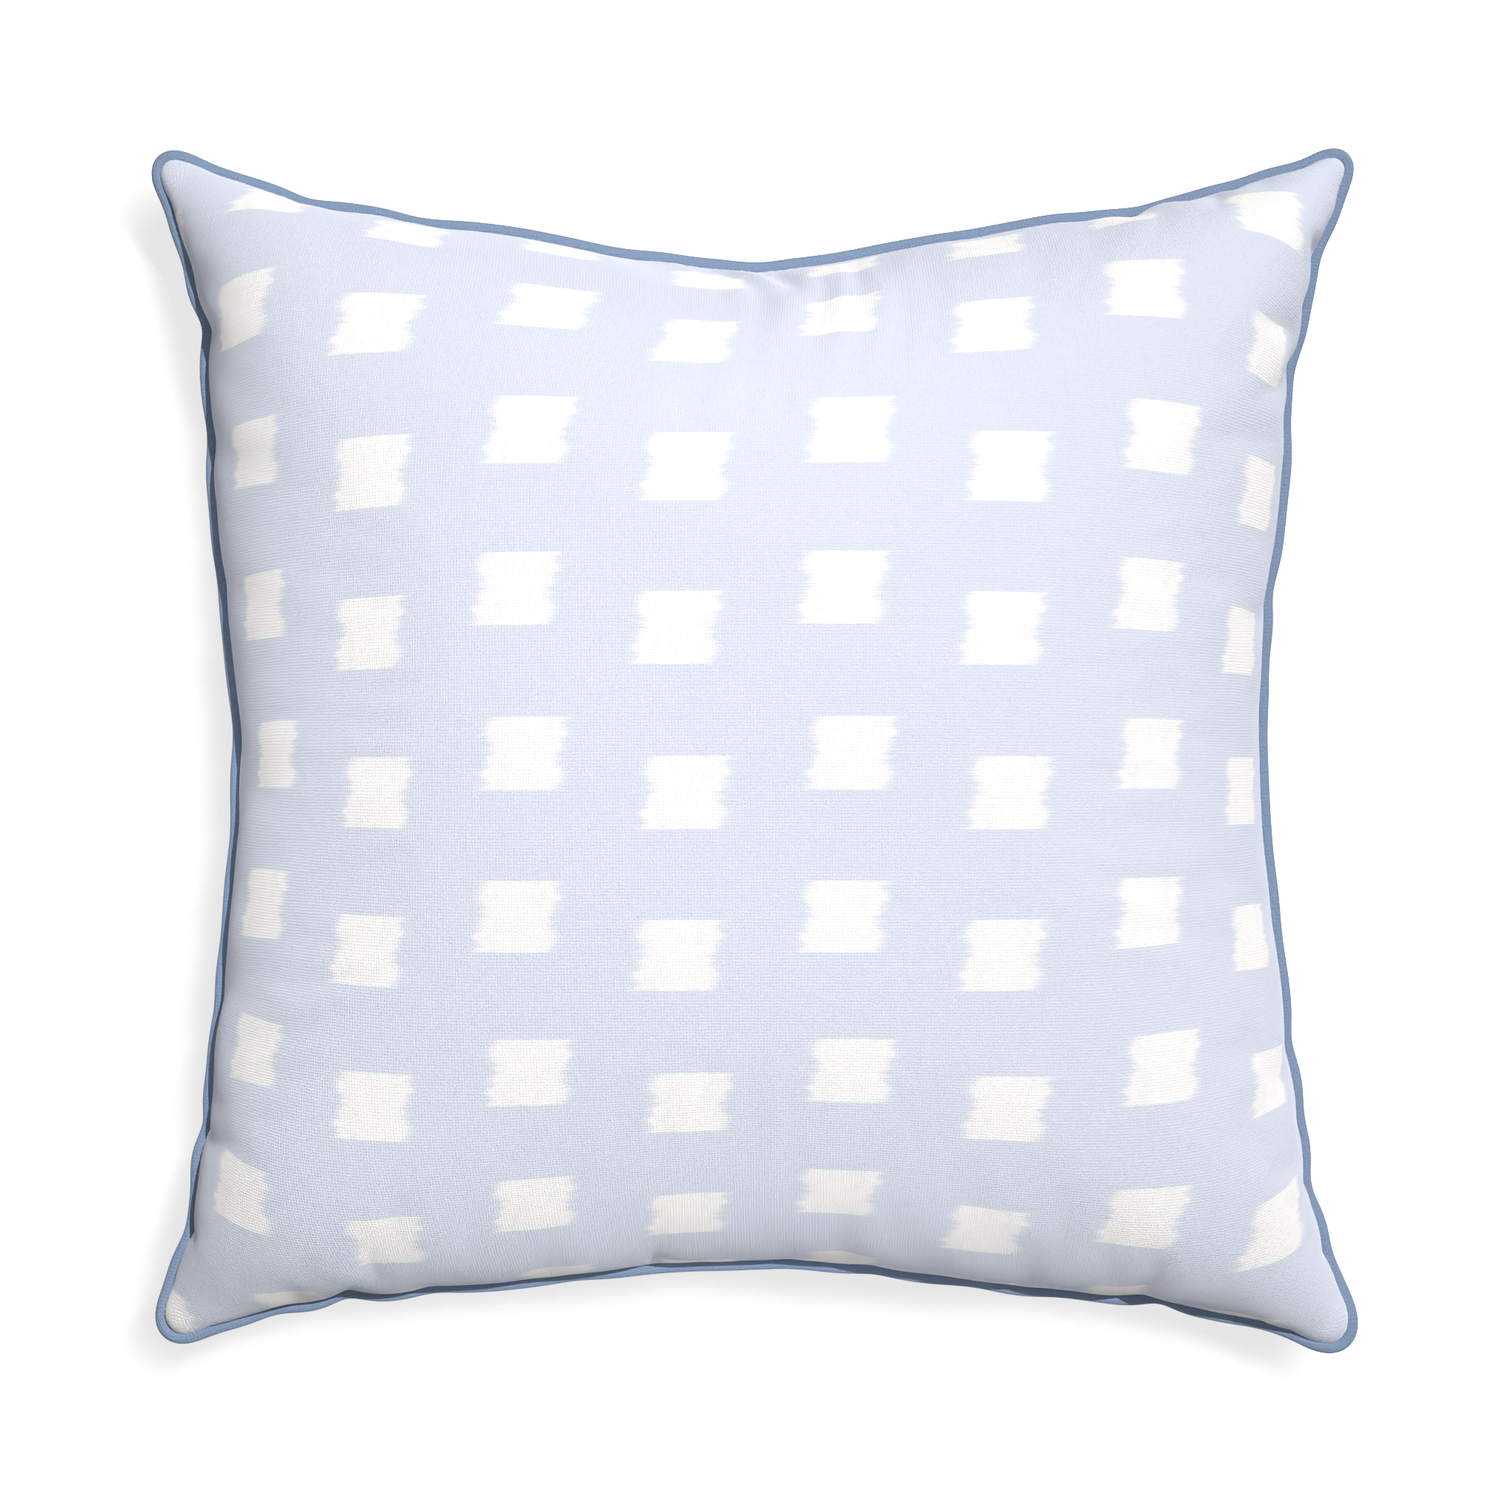 Euro-sham denton custom pillow with sky piping on white background